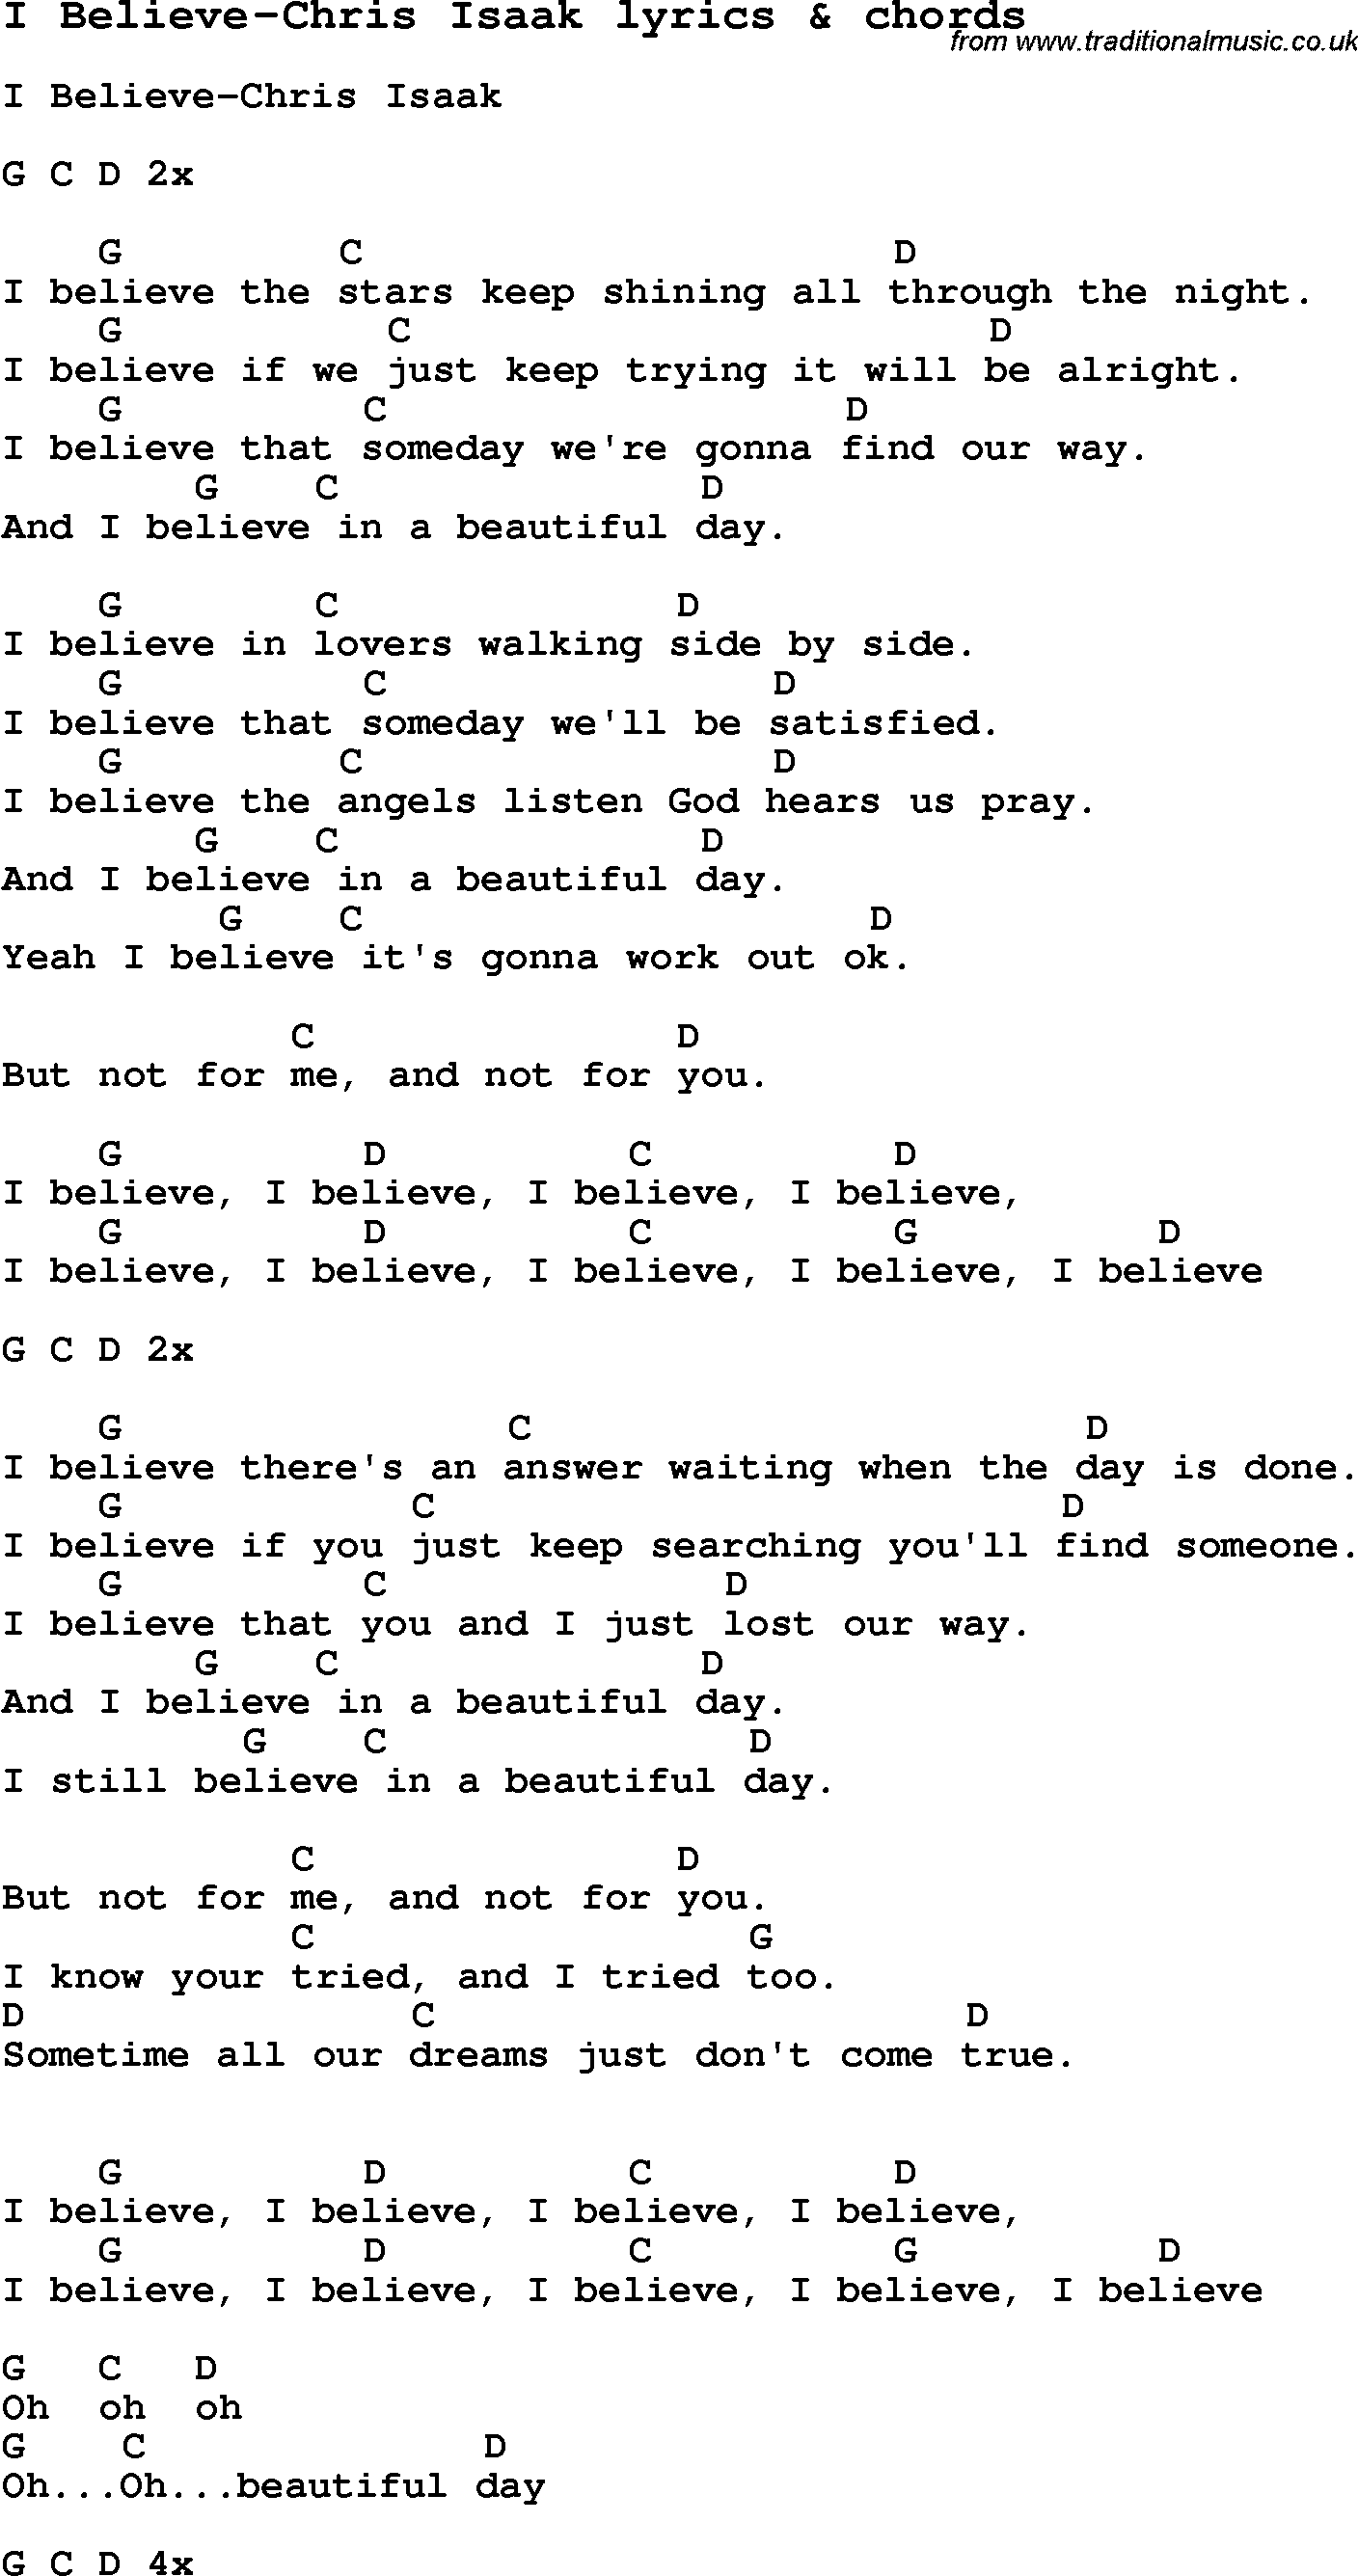 Love Song Lyrics for: I Believe-Chris Isaak with chords for Ukulele, Guitar Banjo etc.